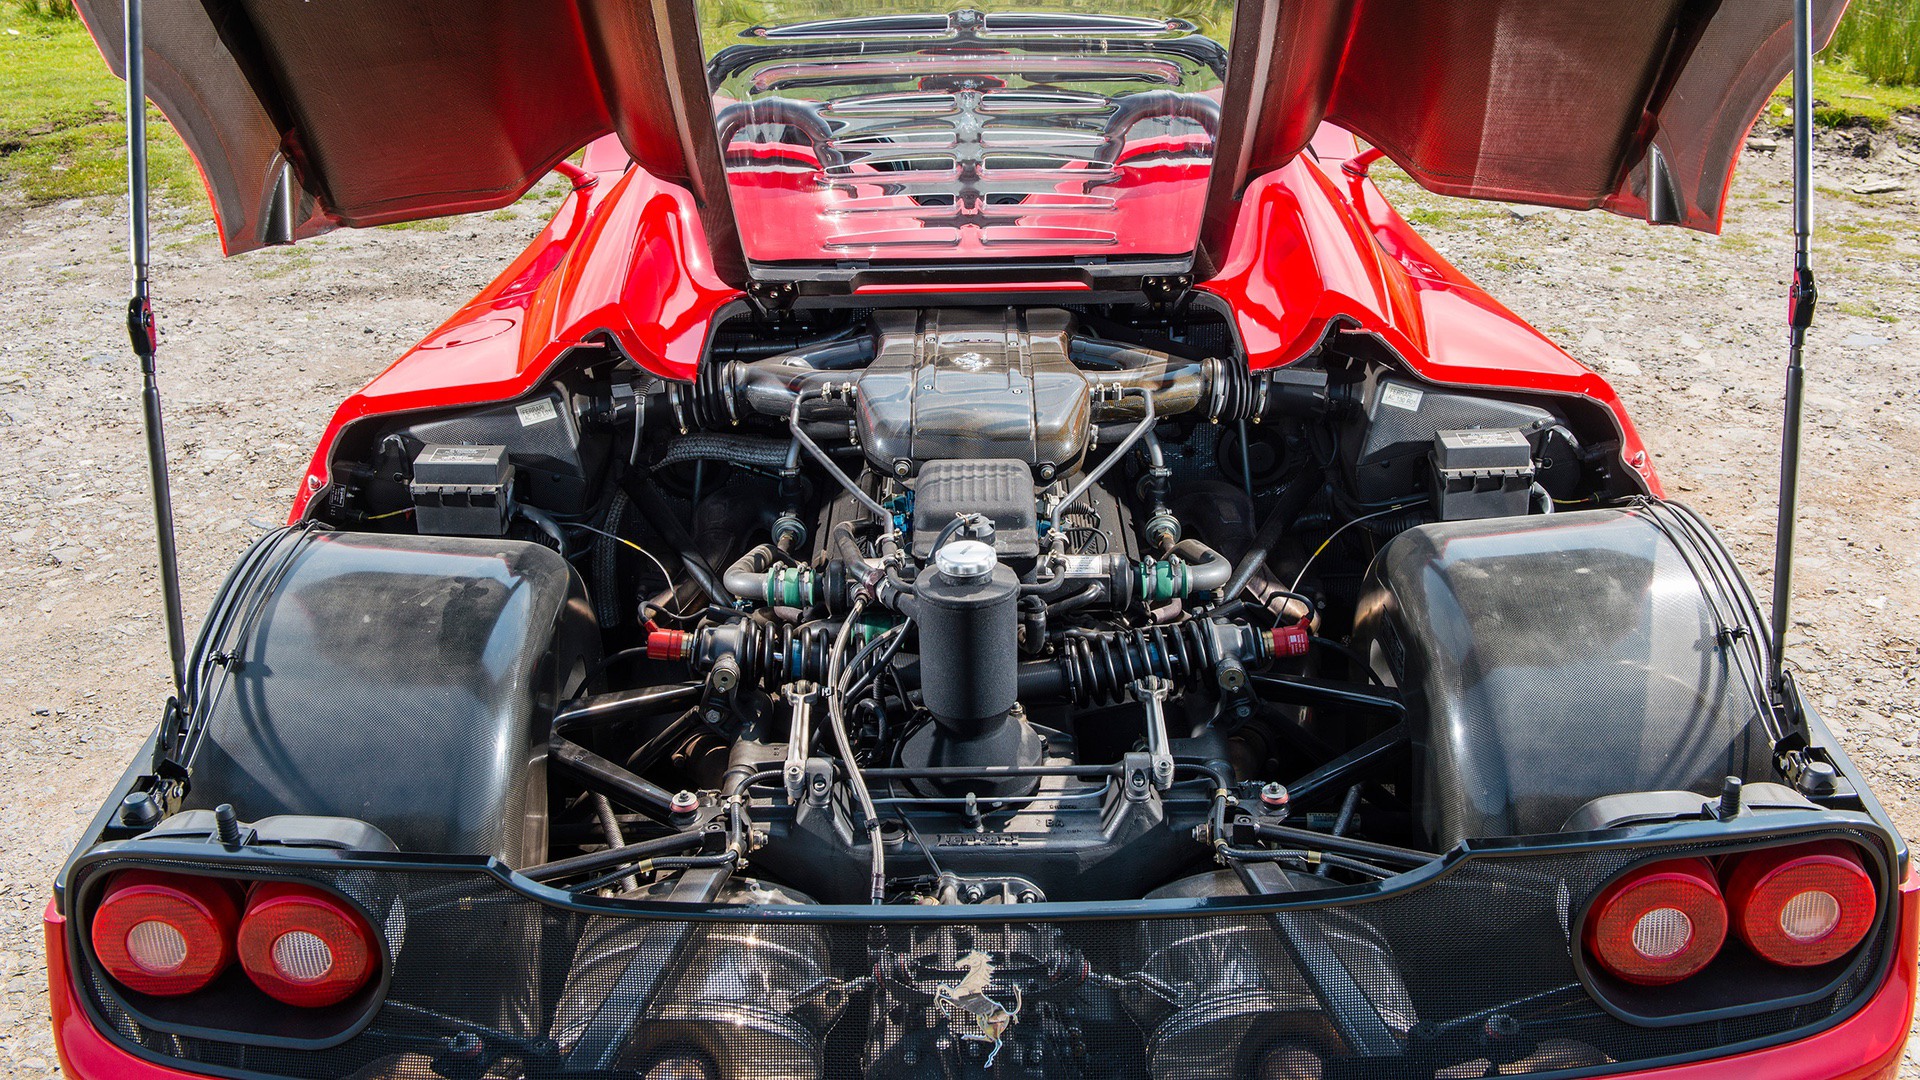 F50 V12 engine derived from Formula One racecar